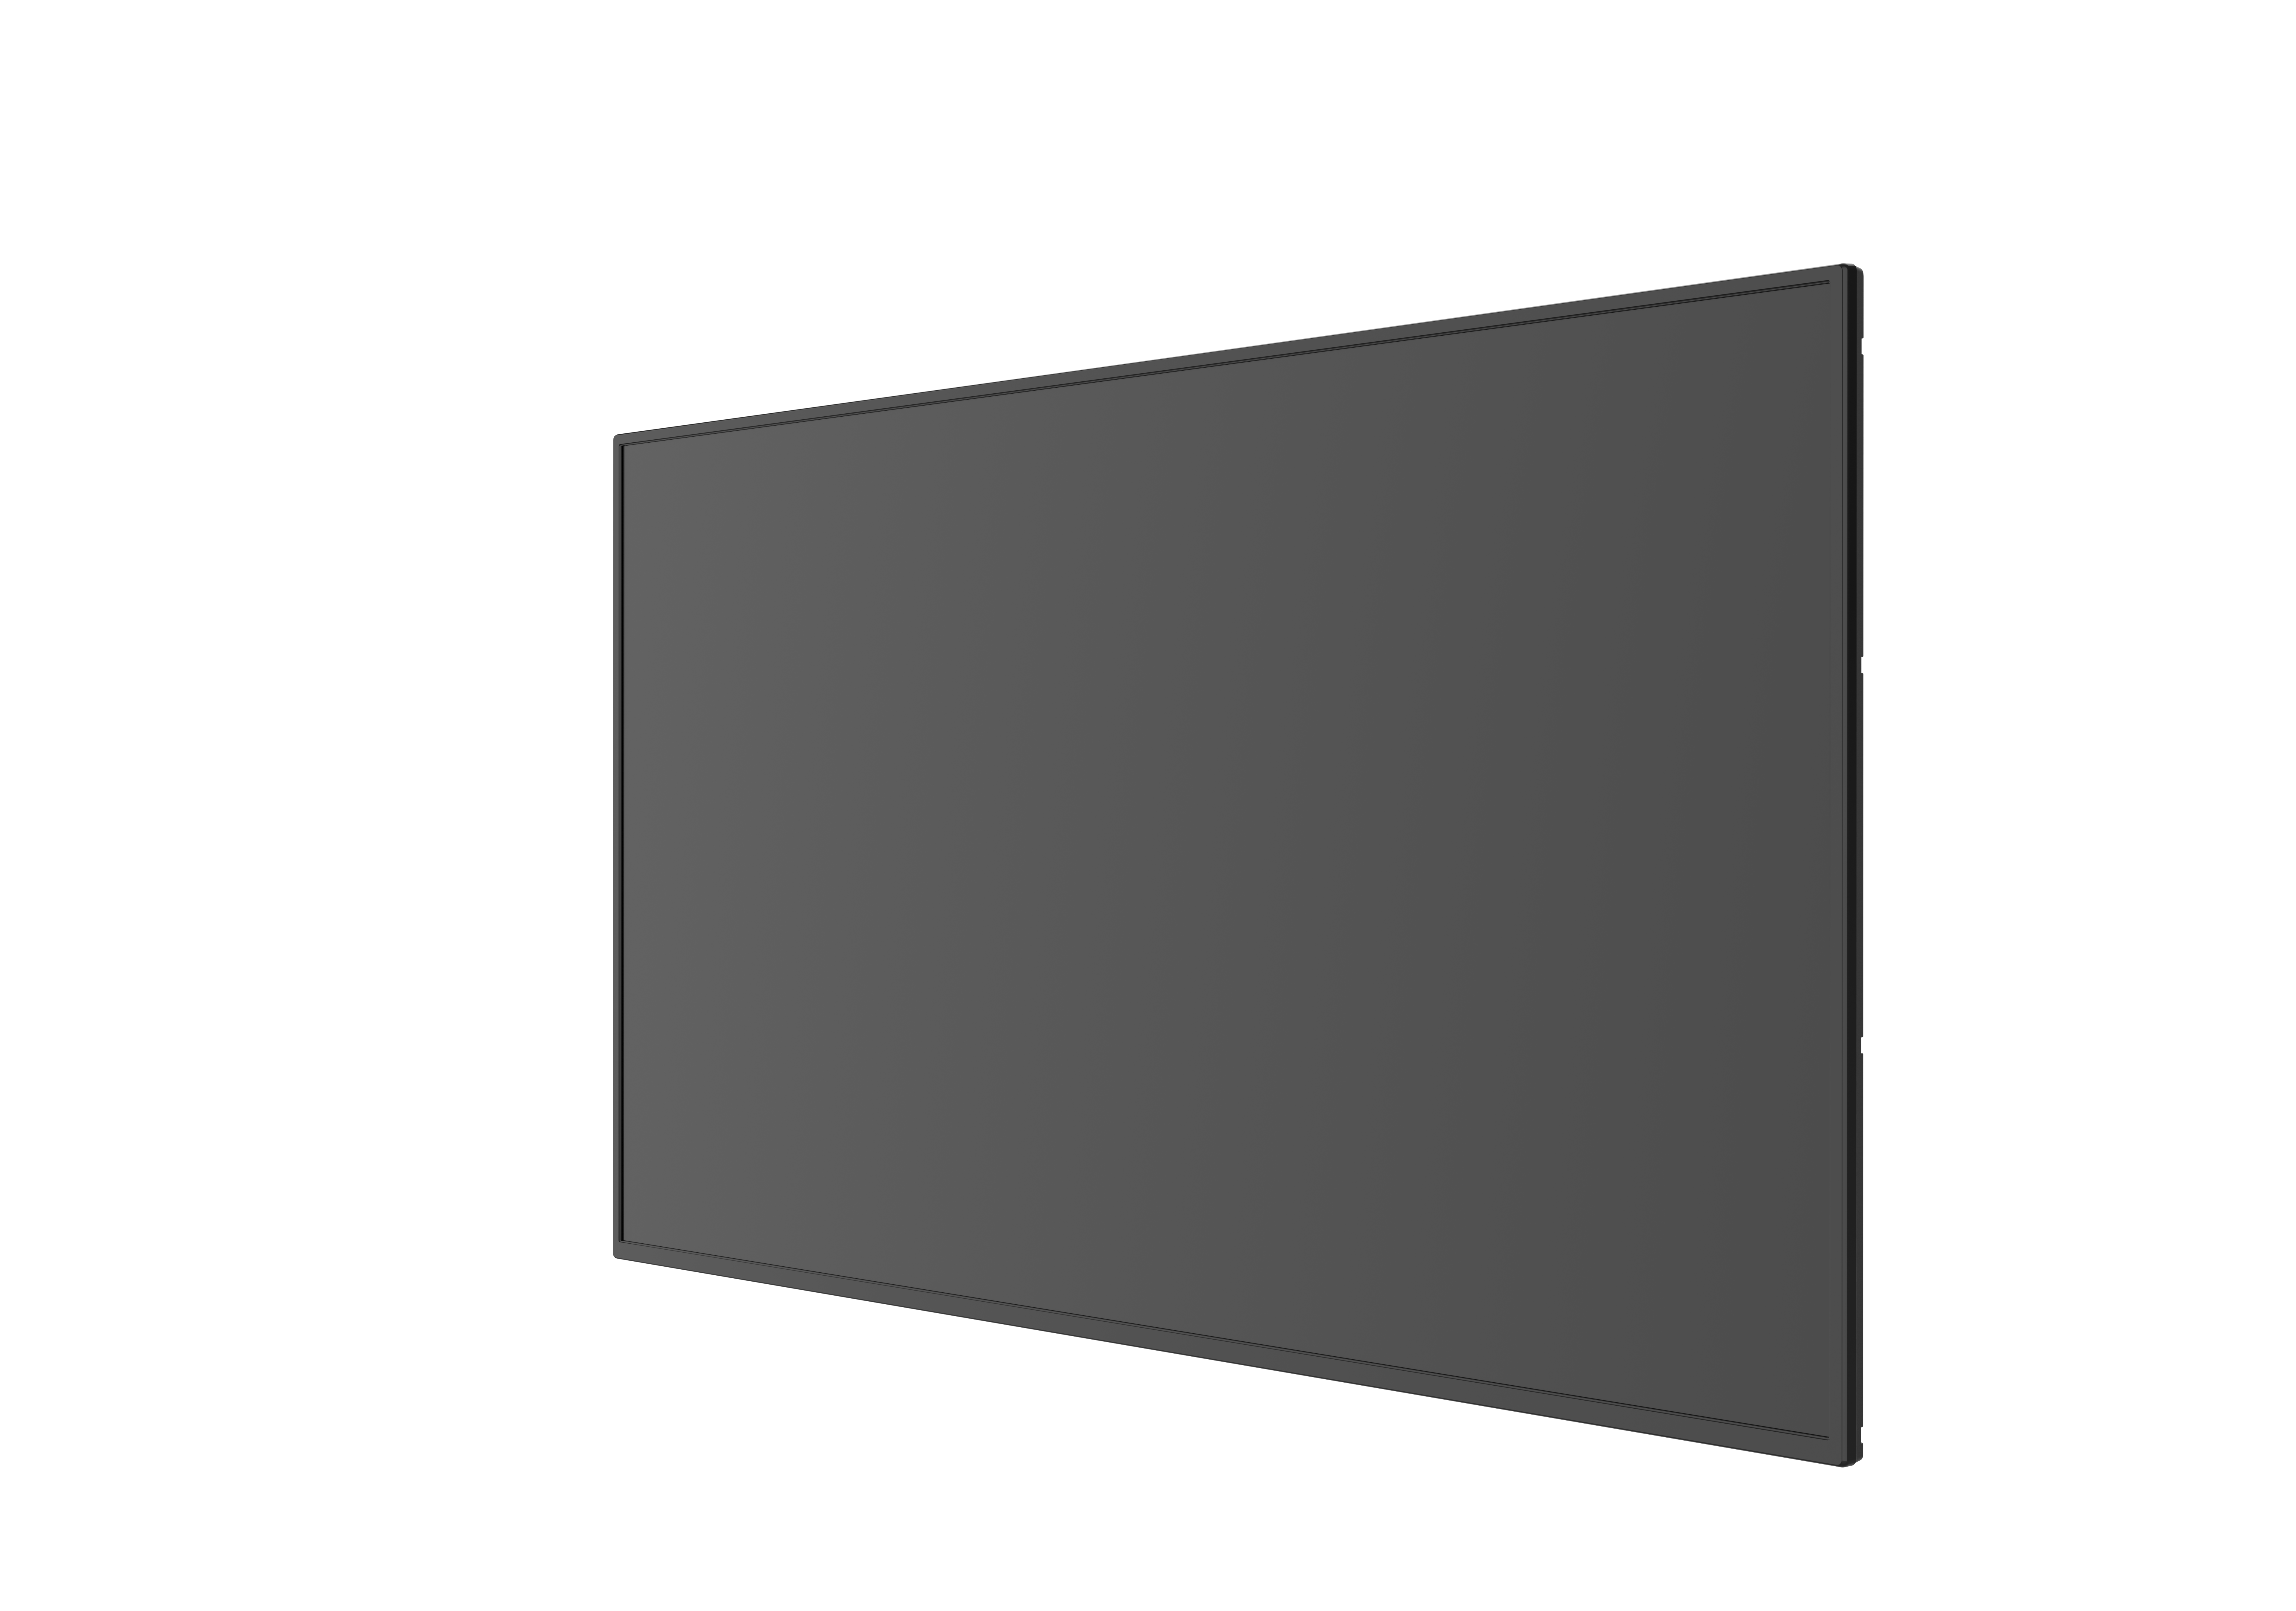 Hisense 65BM66D - 65 Zoll - 500 cd/m²  - Ultra-HD - 3840x2160 Pixel - 24/7 - Signage Display